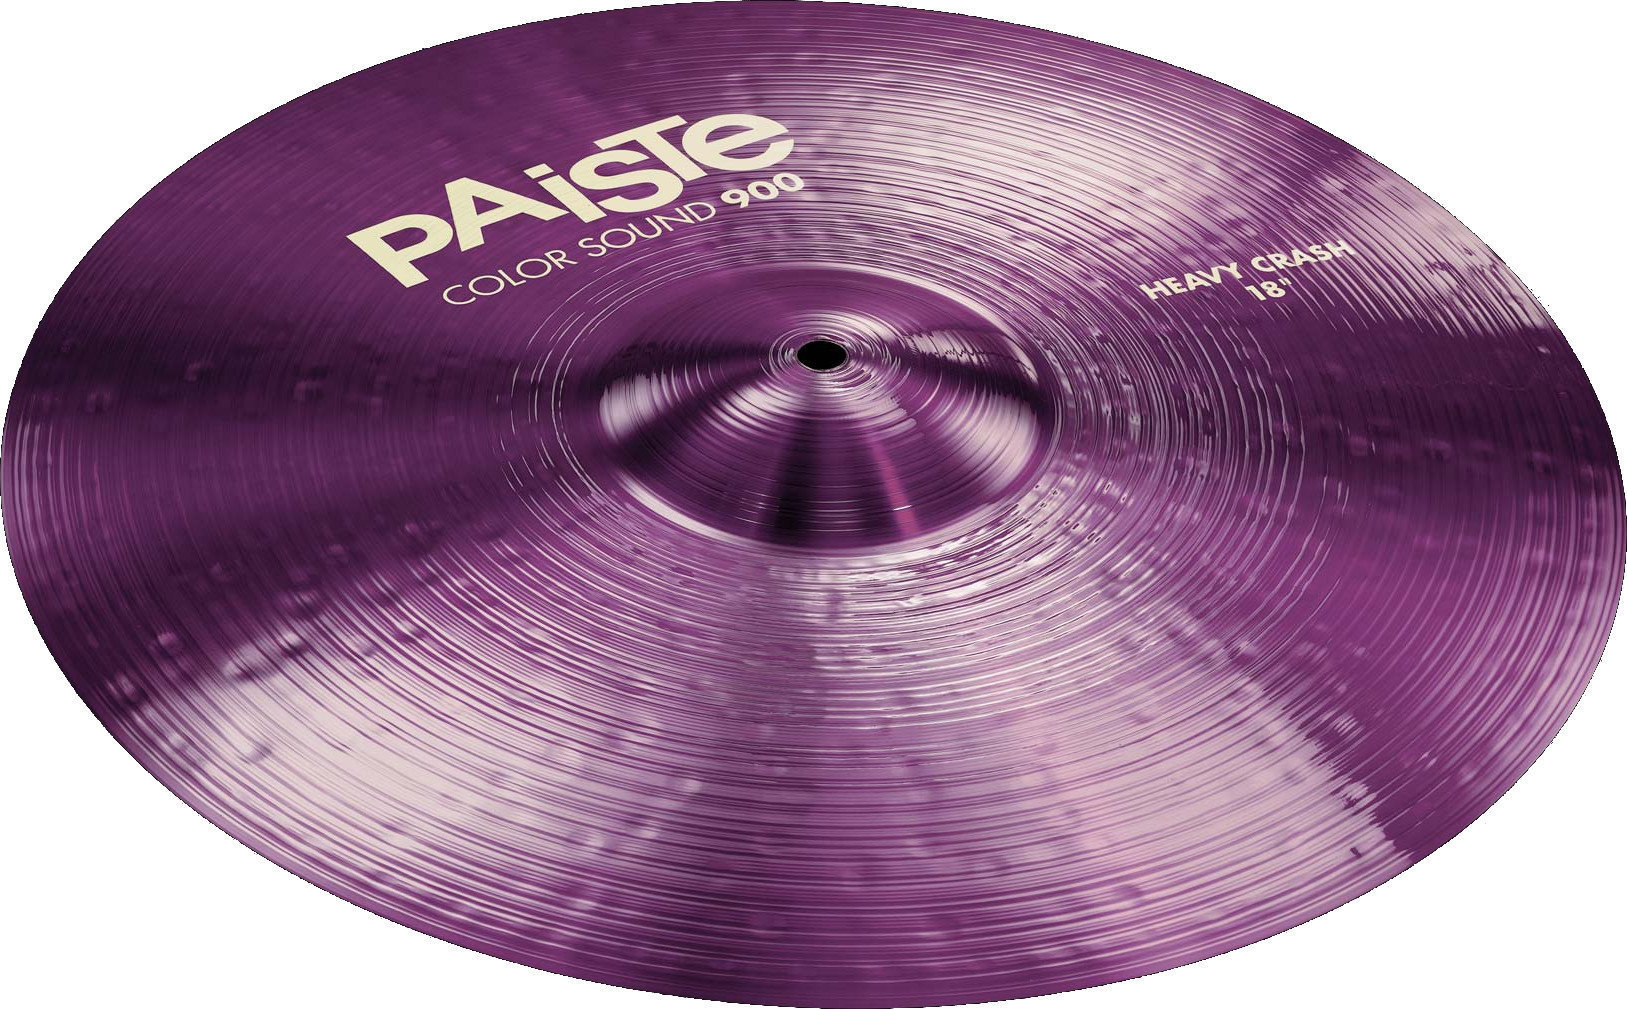 Crash Cymbal Paiste Color Sound 900  Heavy Crash Cymbal 17" Violett